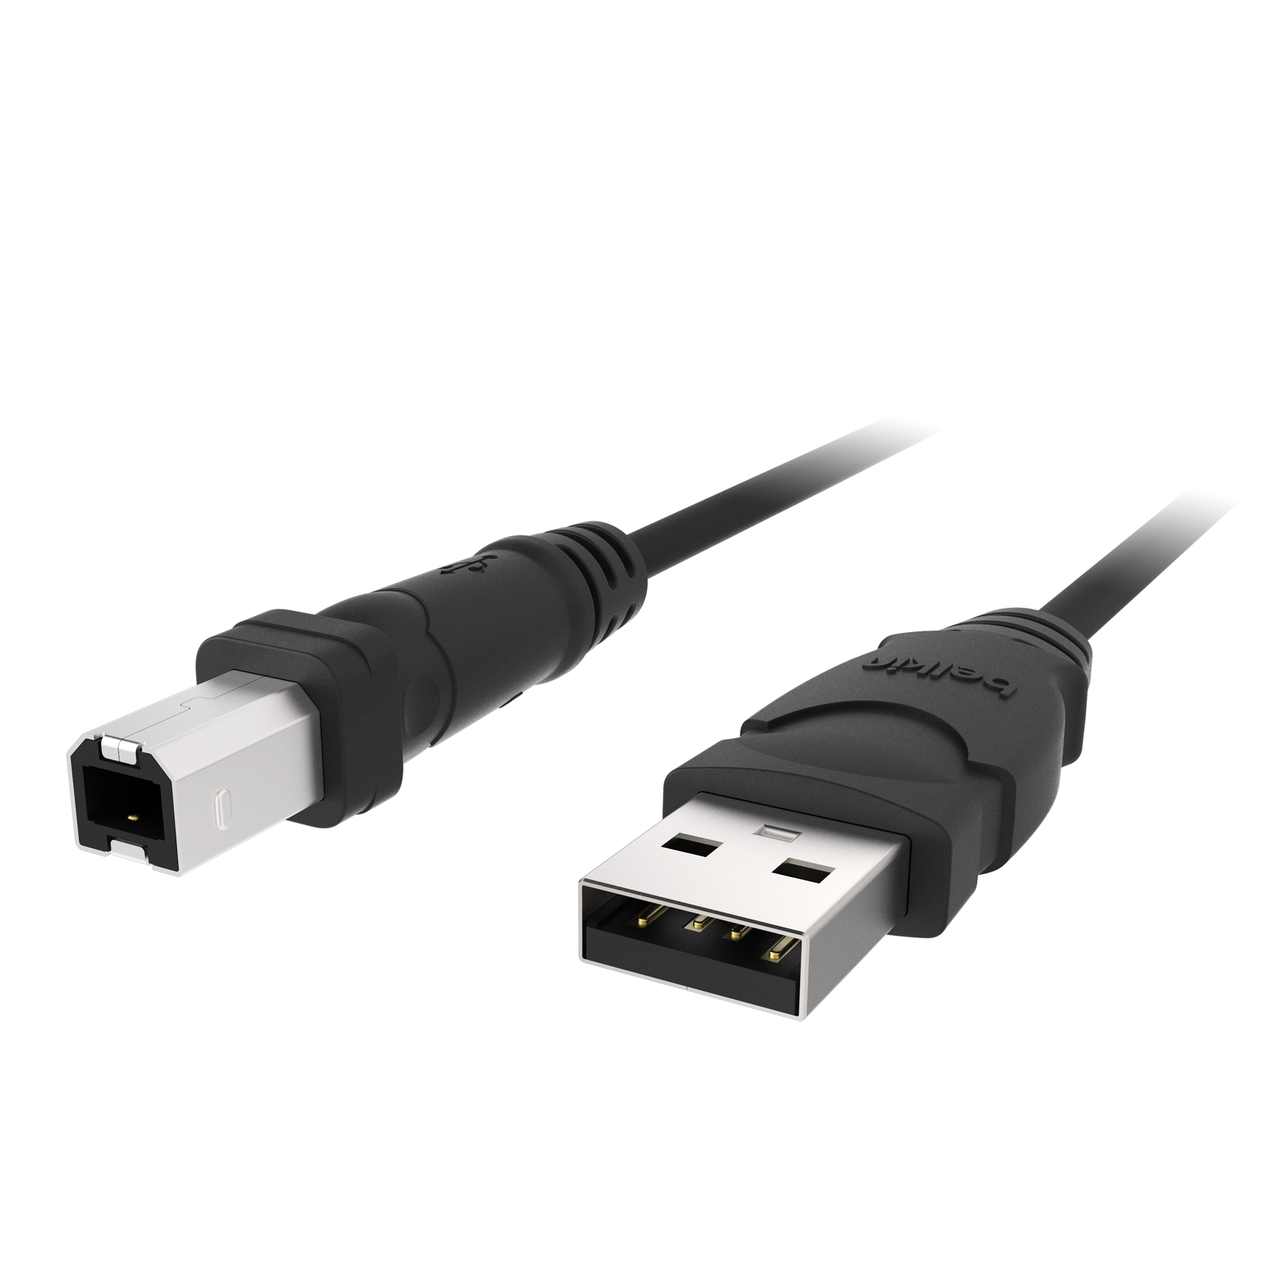 Belkin USB2 Hi-Speed 10' Câble A/B Plug Windows Macintosh Compatible 